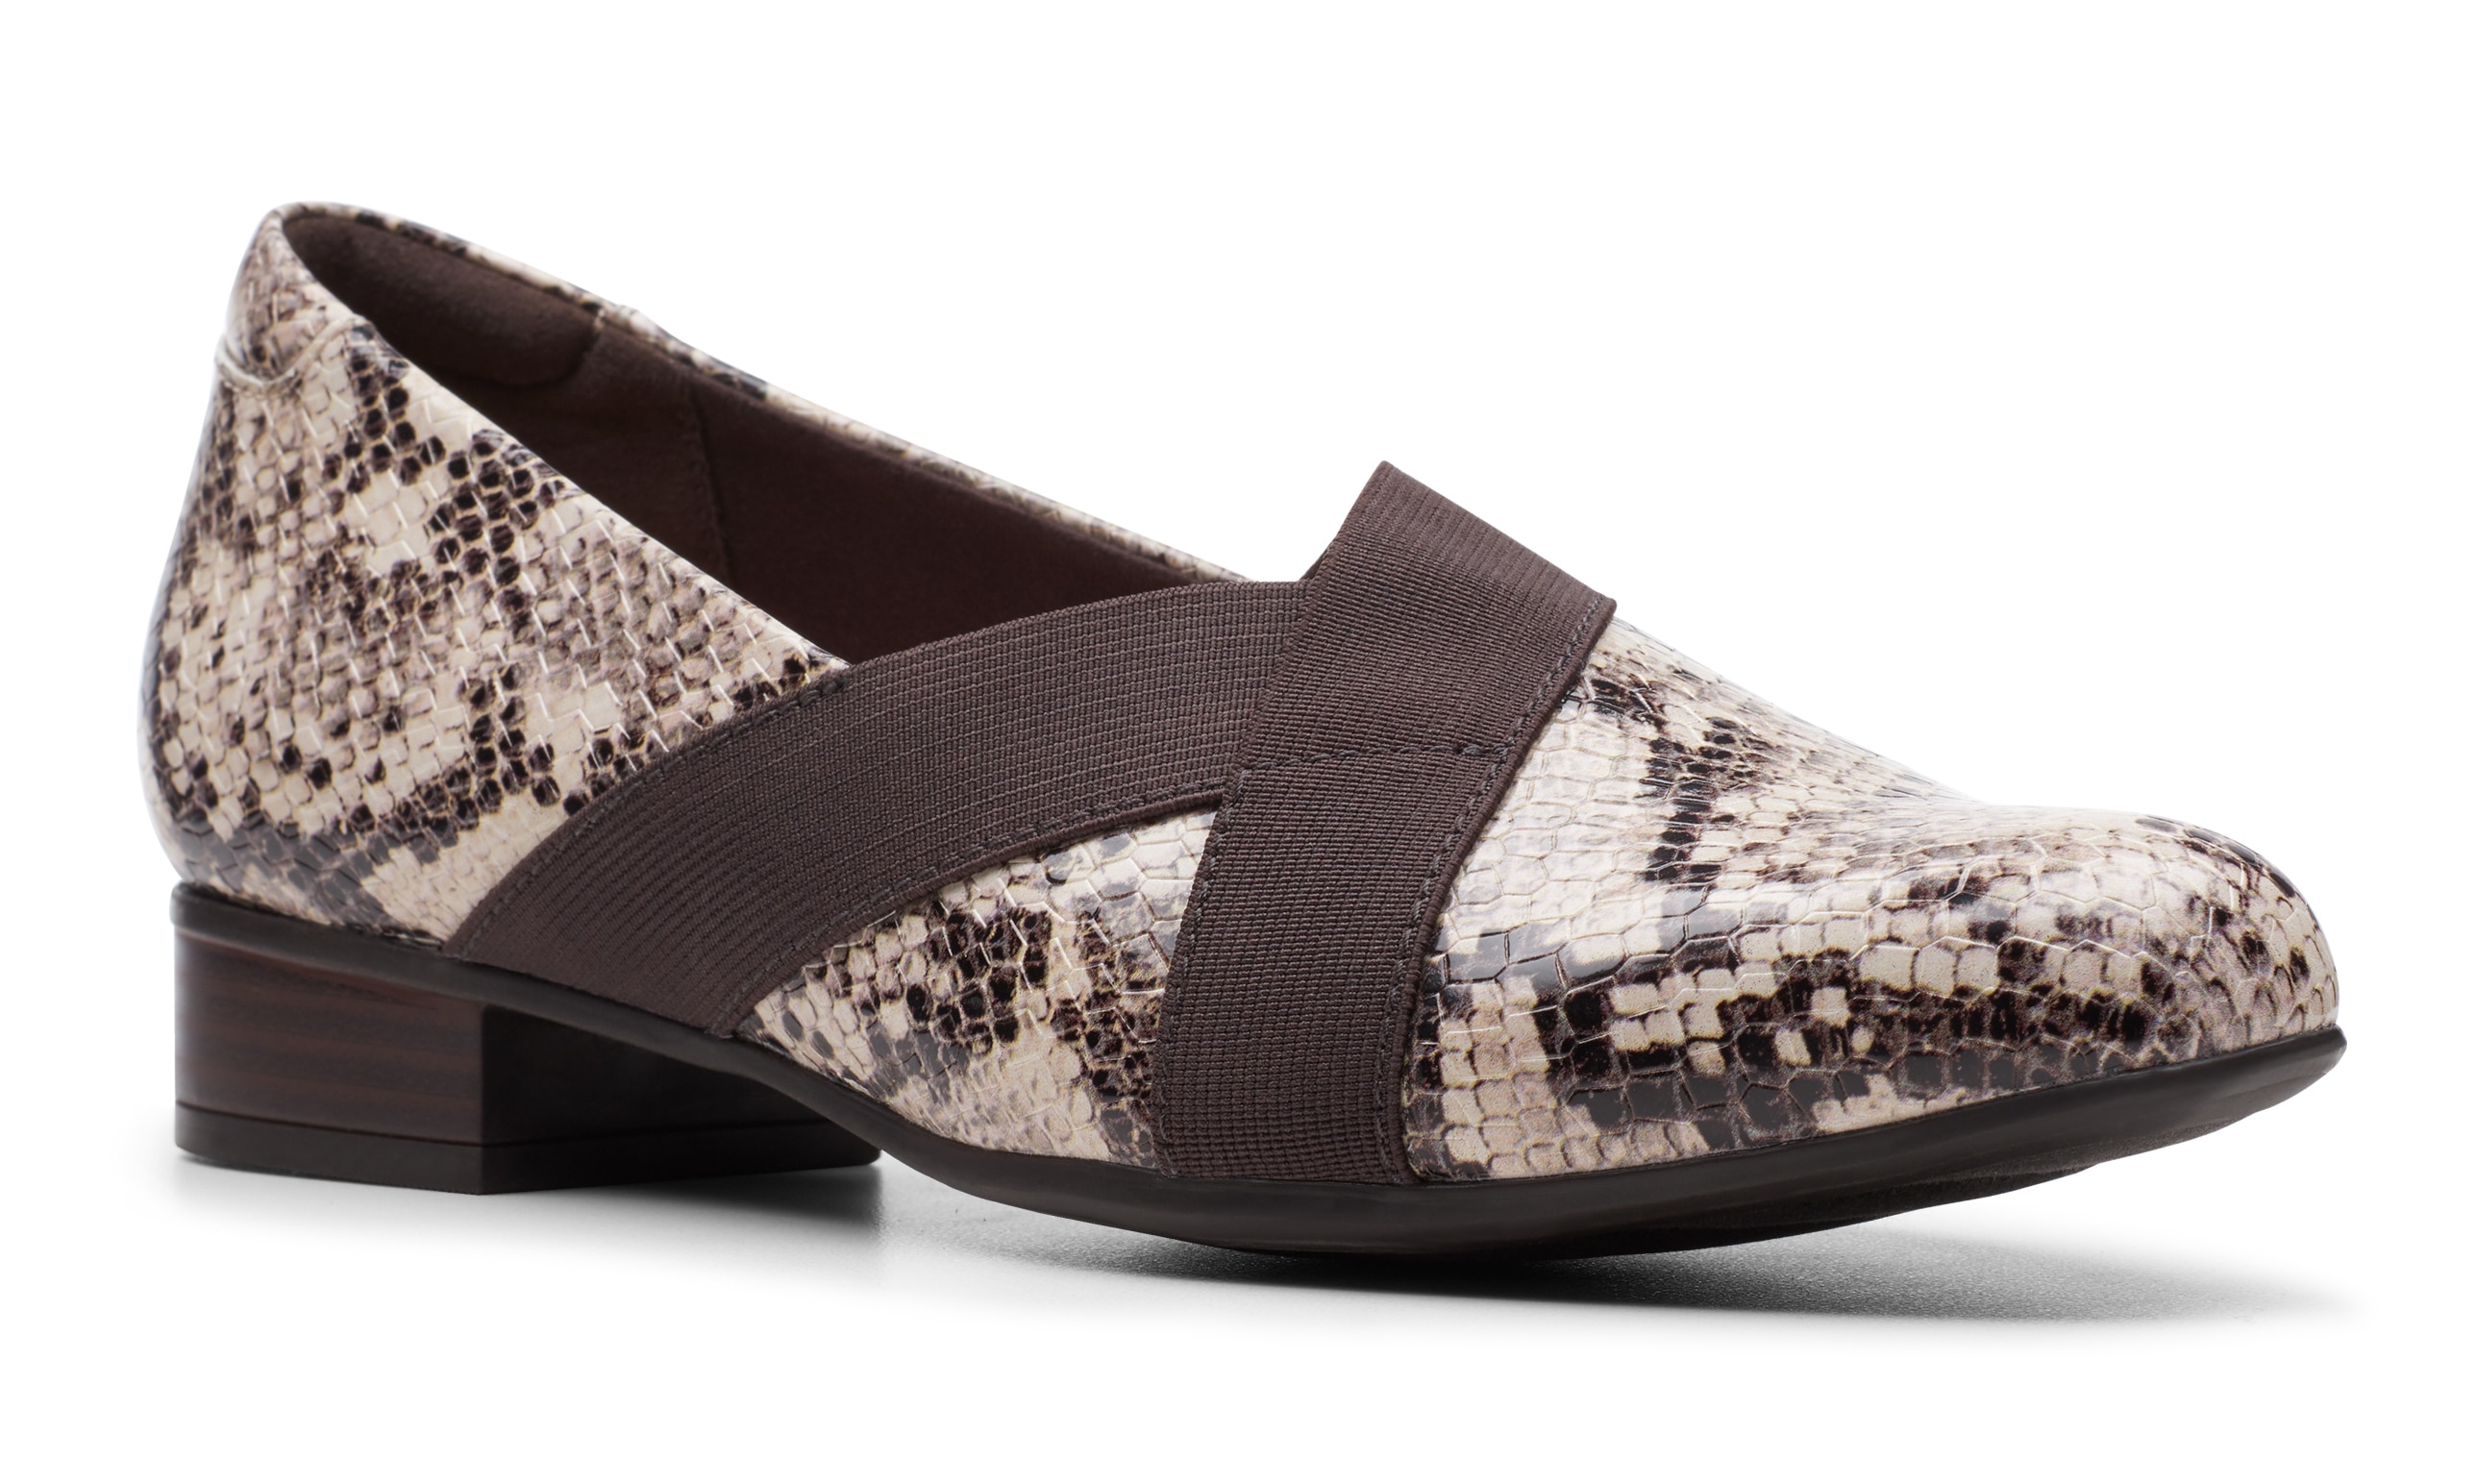 clarks women's manilla parham gladiator sandal